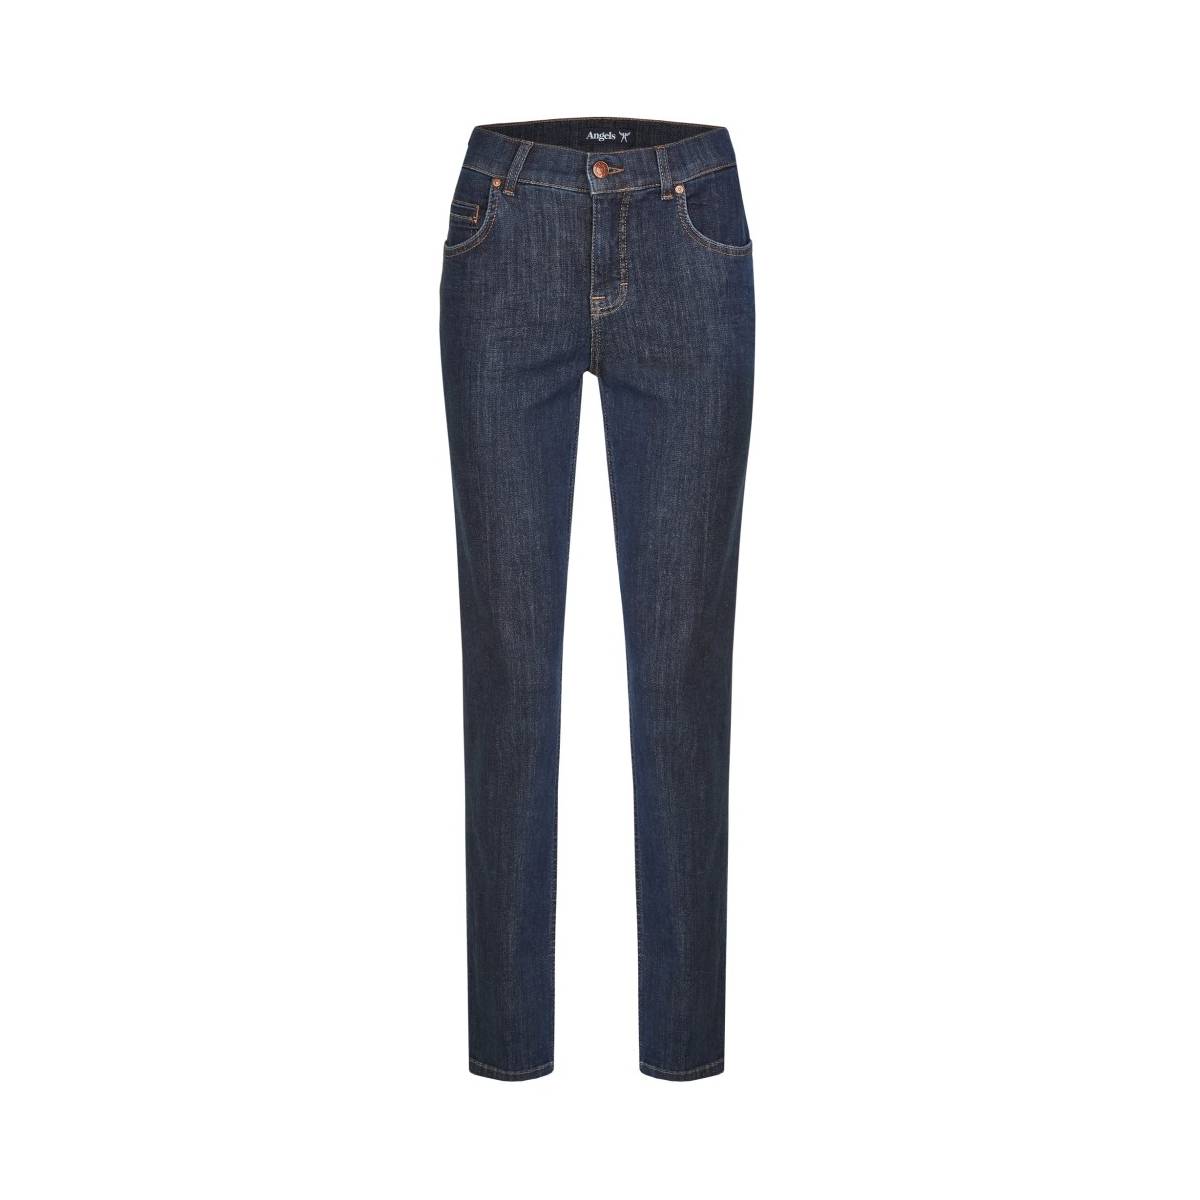 ANGELS  broeken donkere jeans -  model cici/333432 - Dameskleding broeken jeans